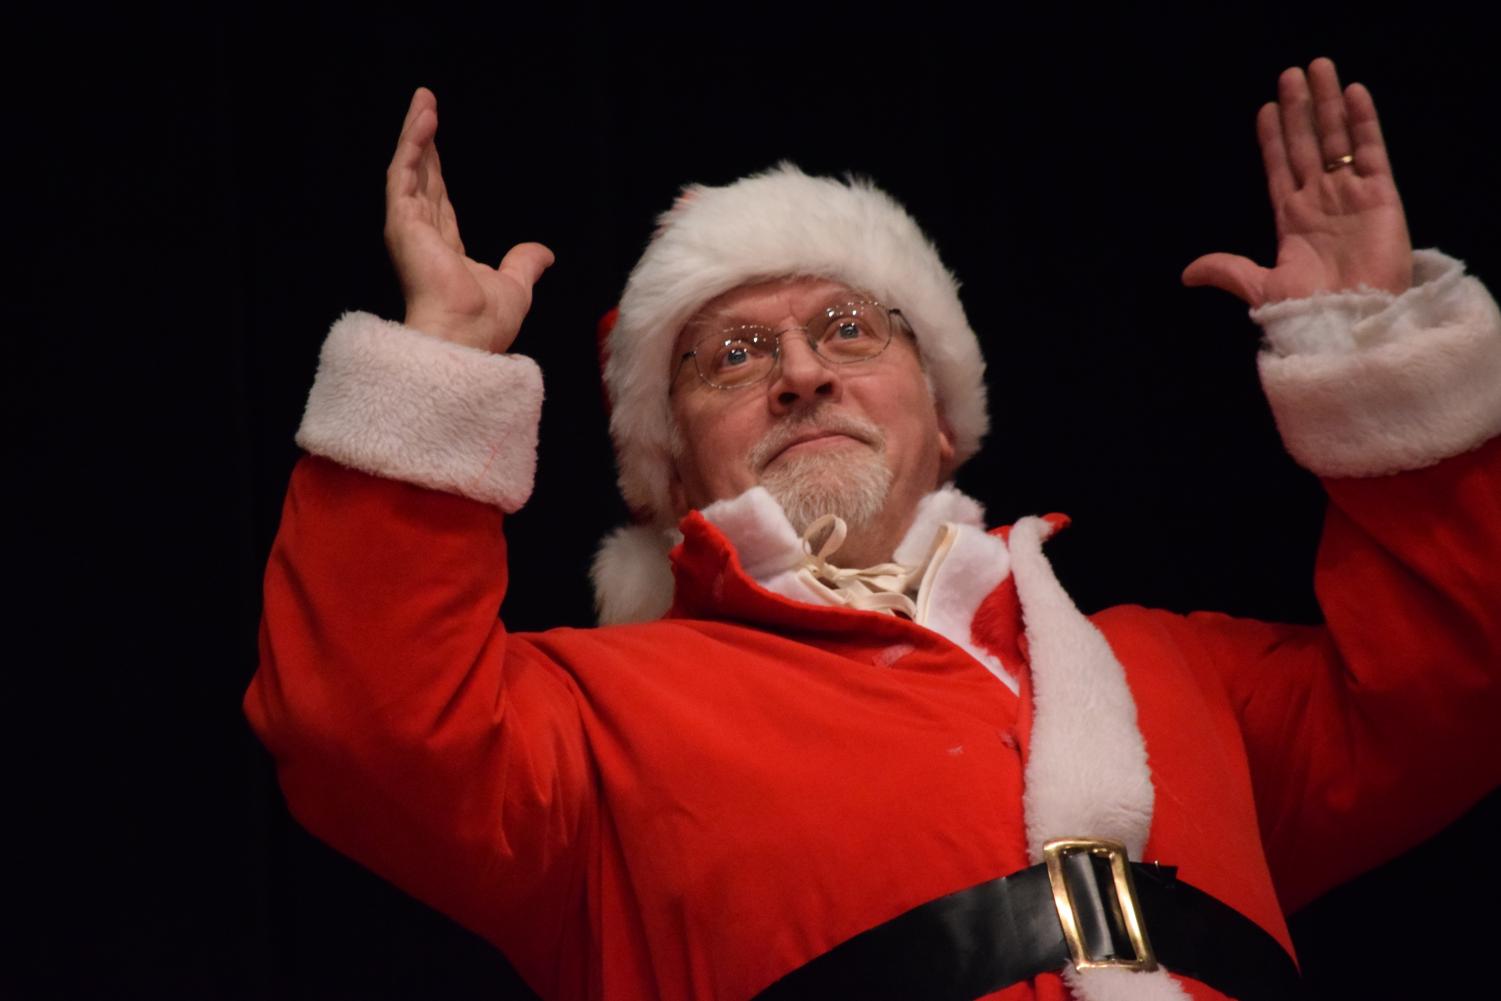 Mr. McNitt plays Santa